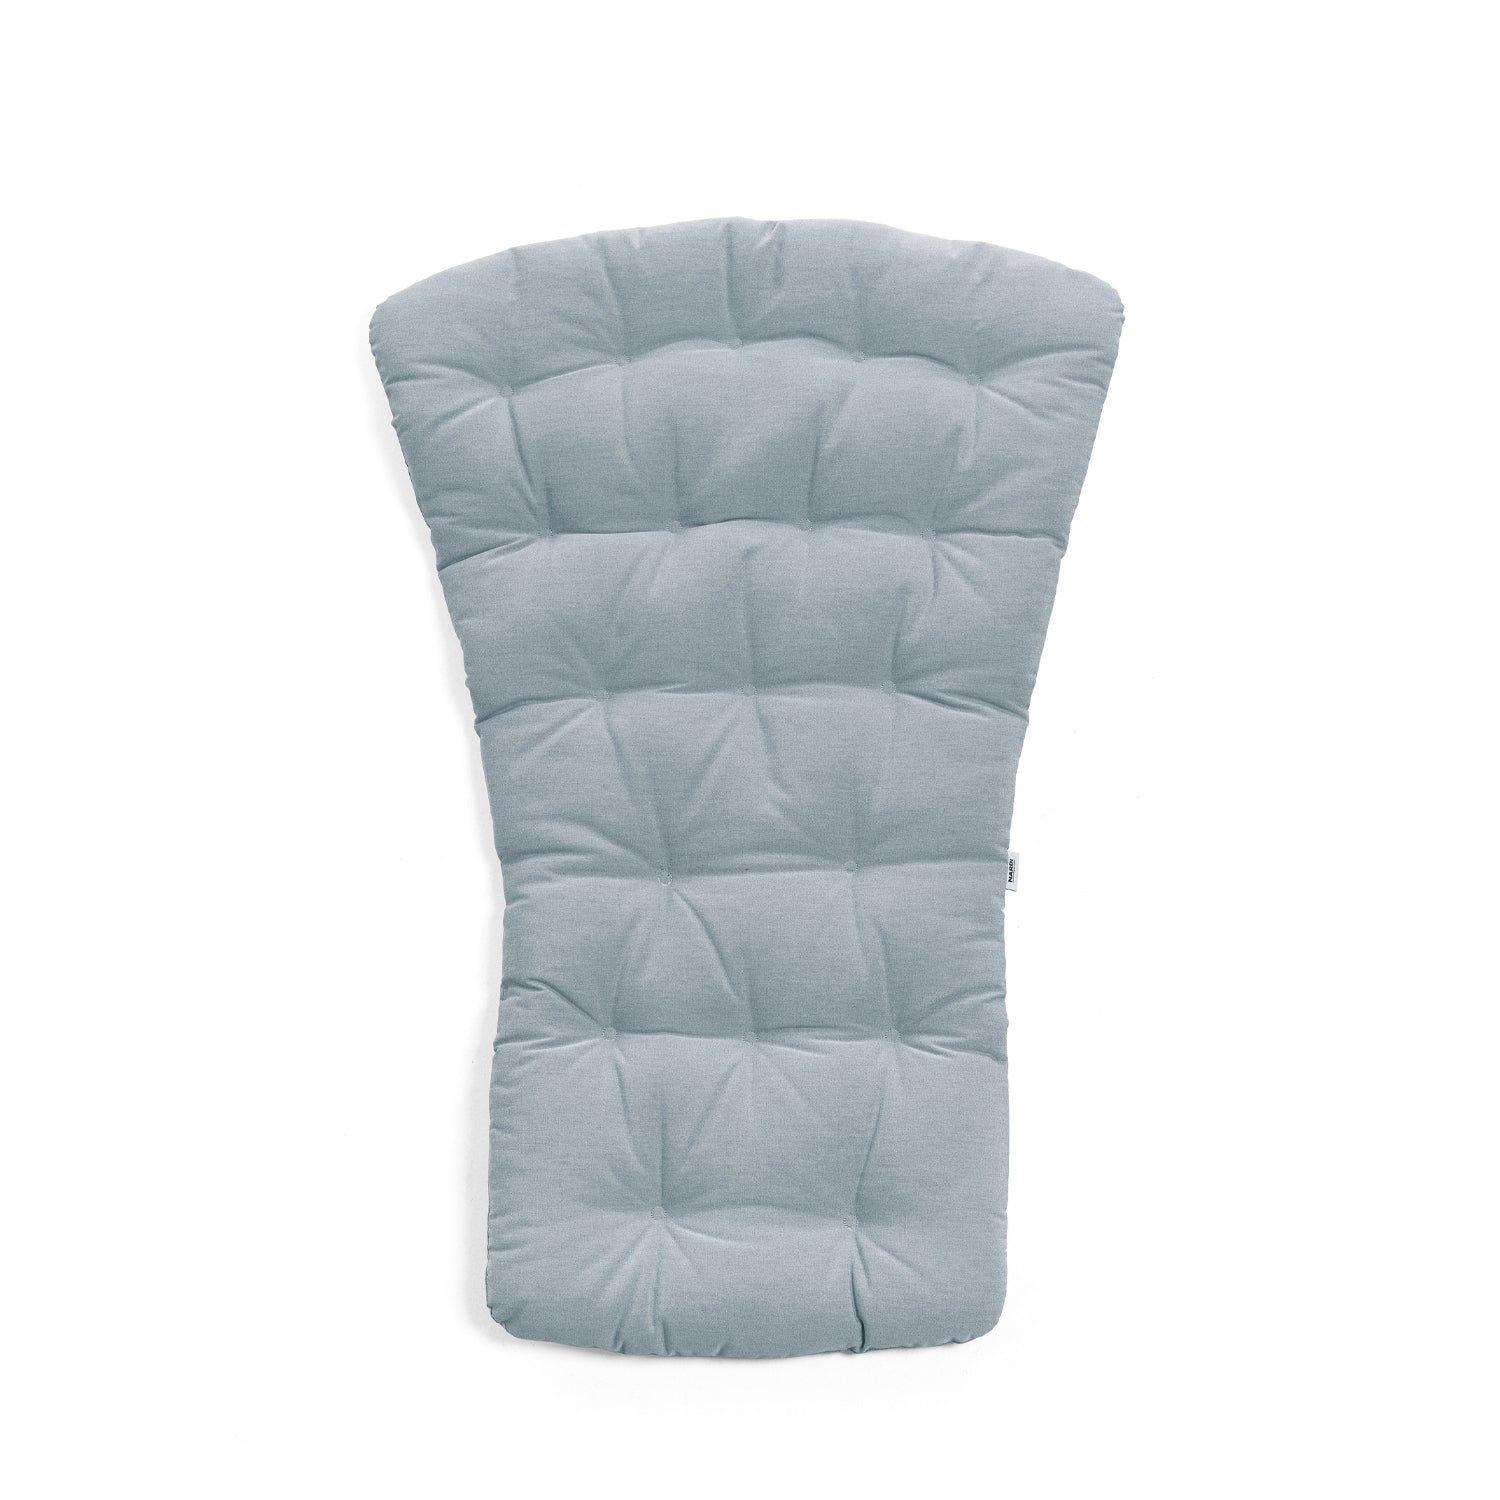 Folio Comfort Cushion In Sky Blue